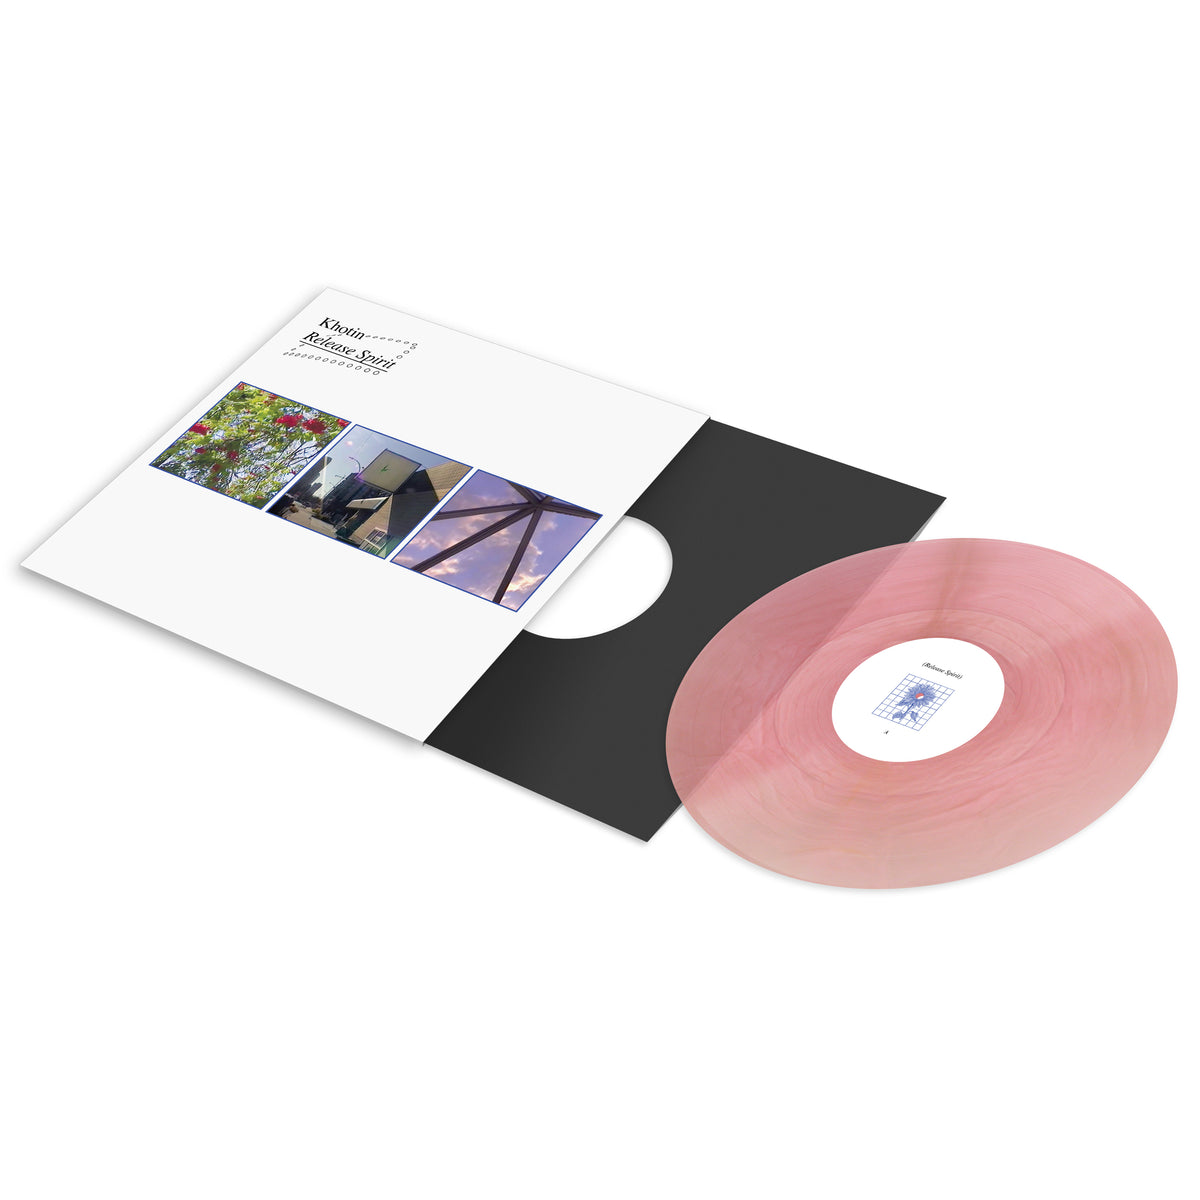 Khotin - Release Spirit (Pink Cloud Vinyl LP)